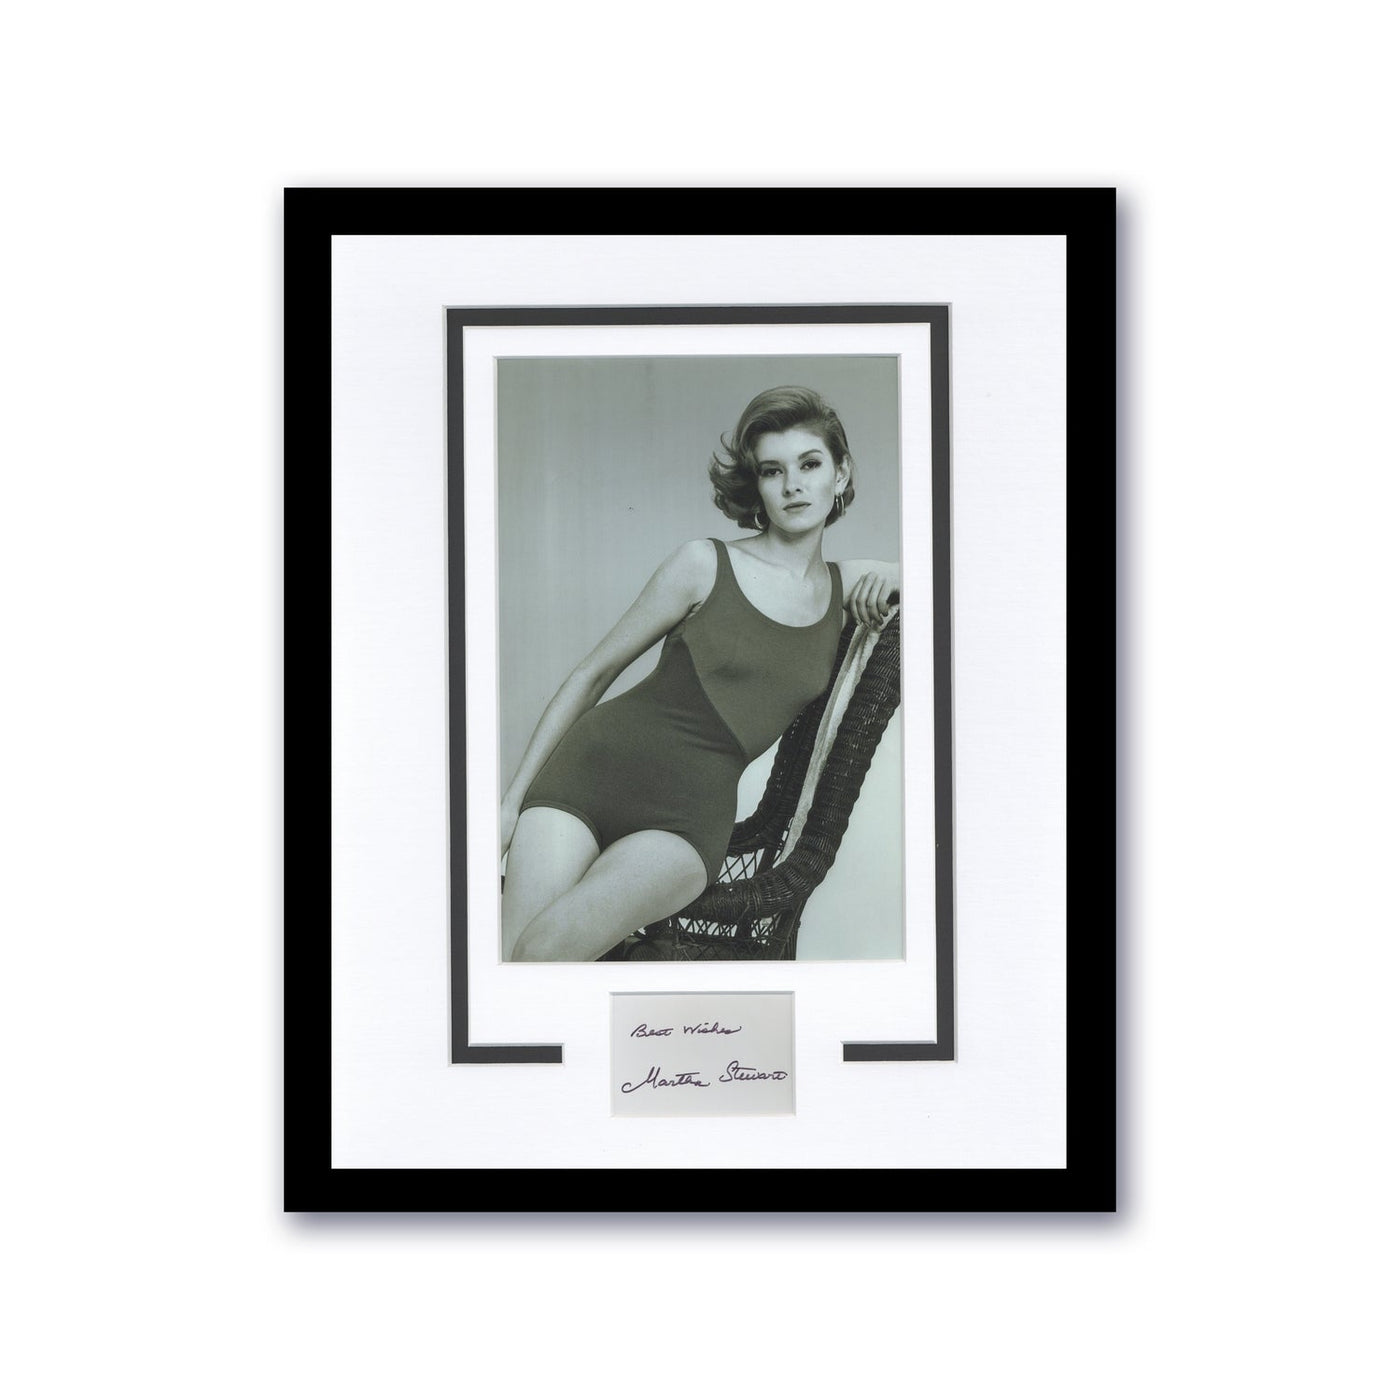 Martha Stewart Autographed Signed 11x14 Framed Photo Young Modeling B&W ACOA